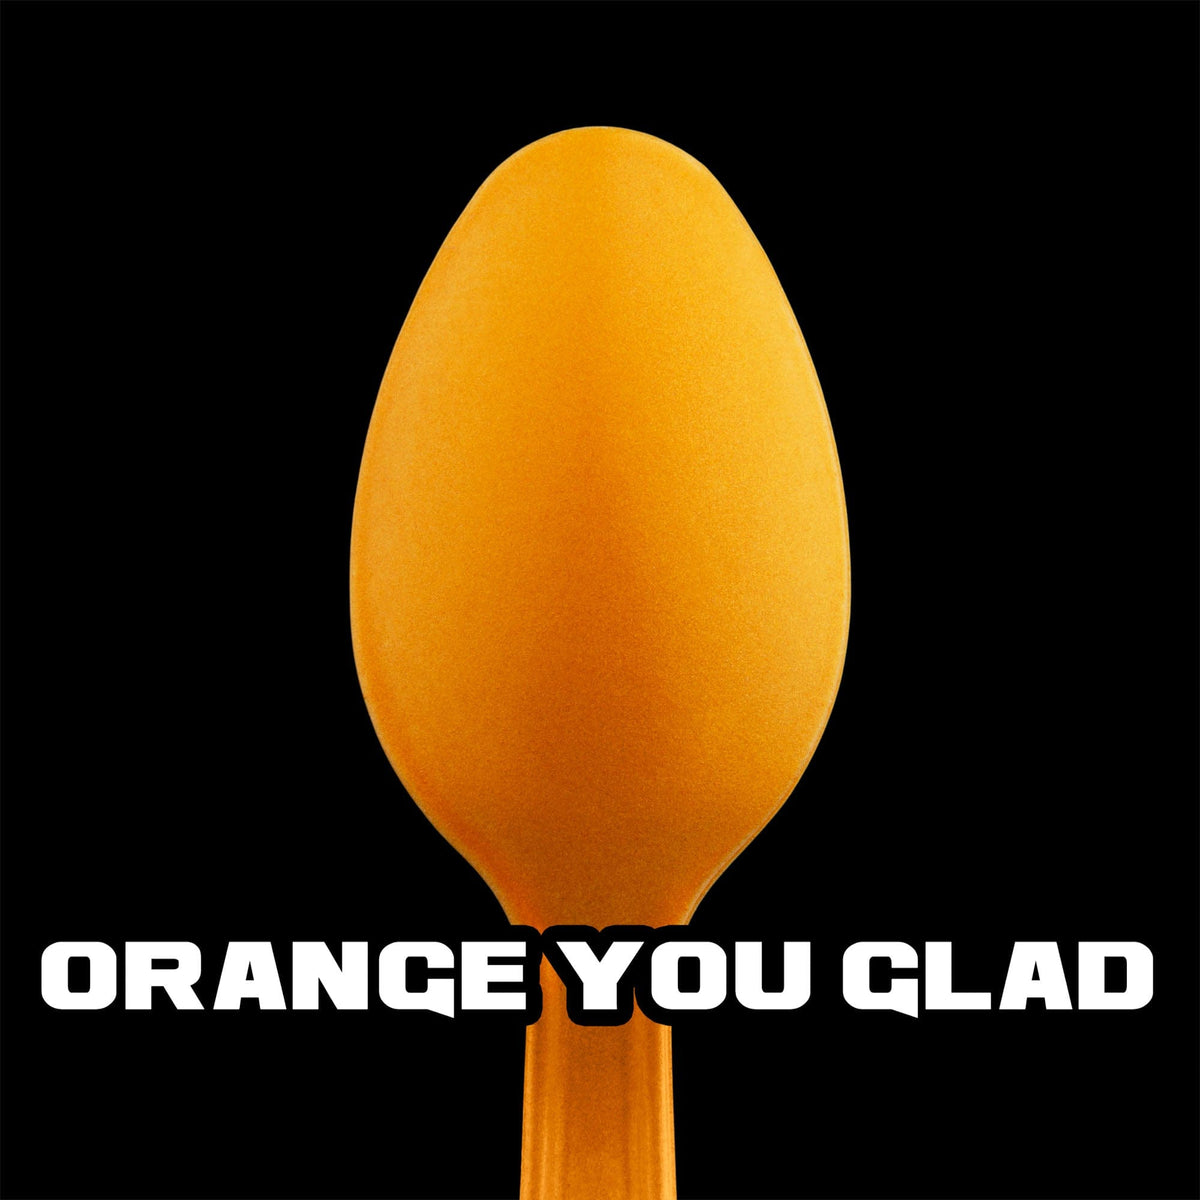 Orange You Glad Metallic Acrylic Paint Metallic Turbo Dork Exit 23 Games Orange You Glad Metallic Acrylic Paint